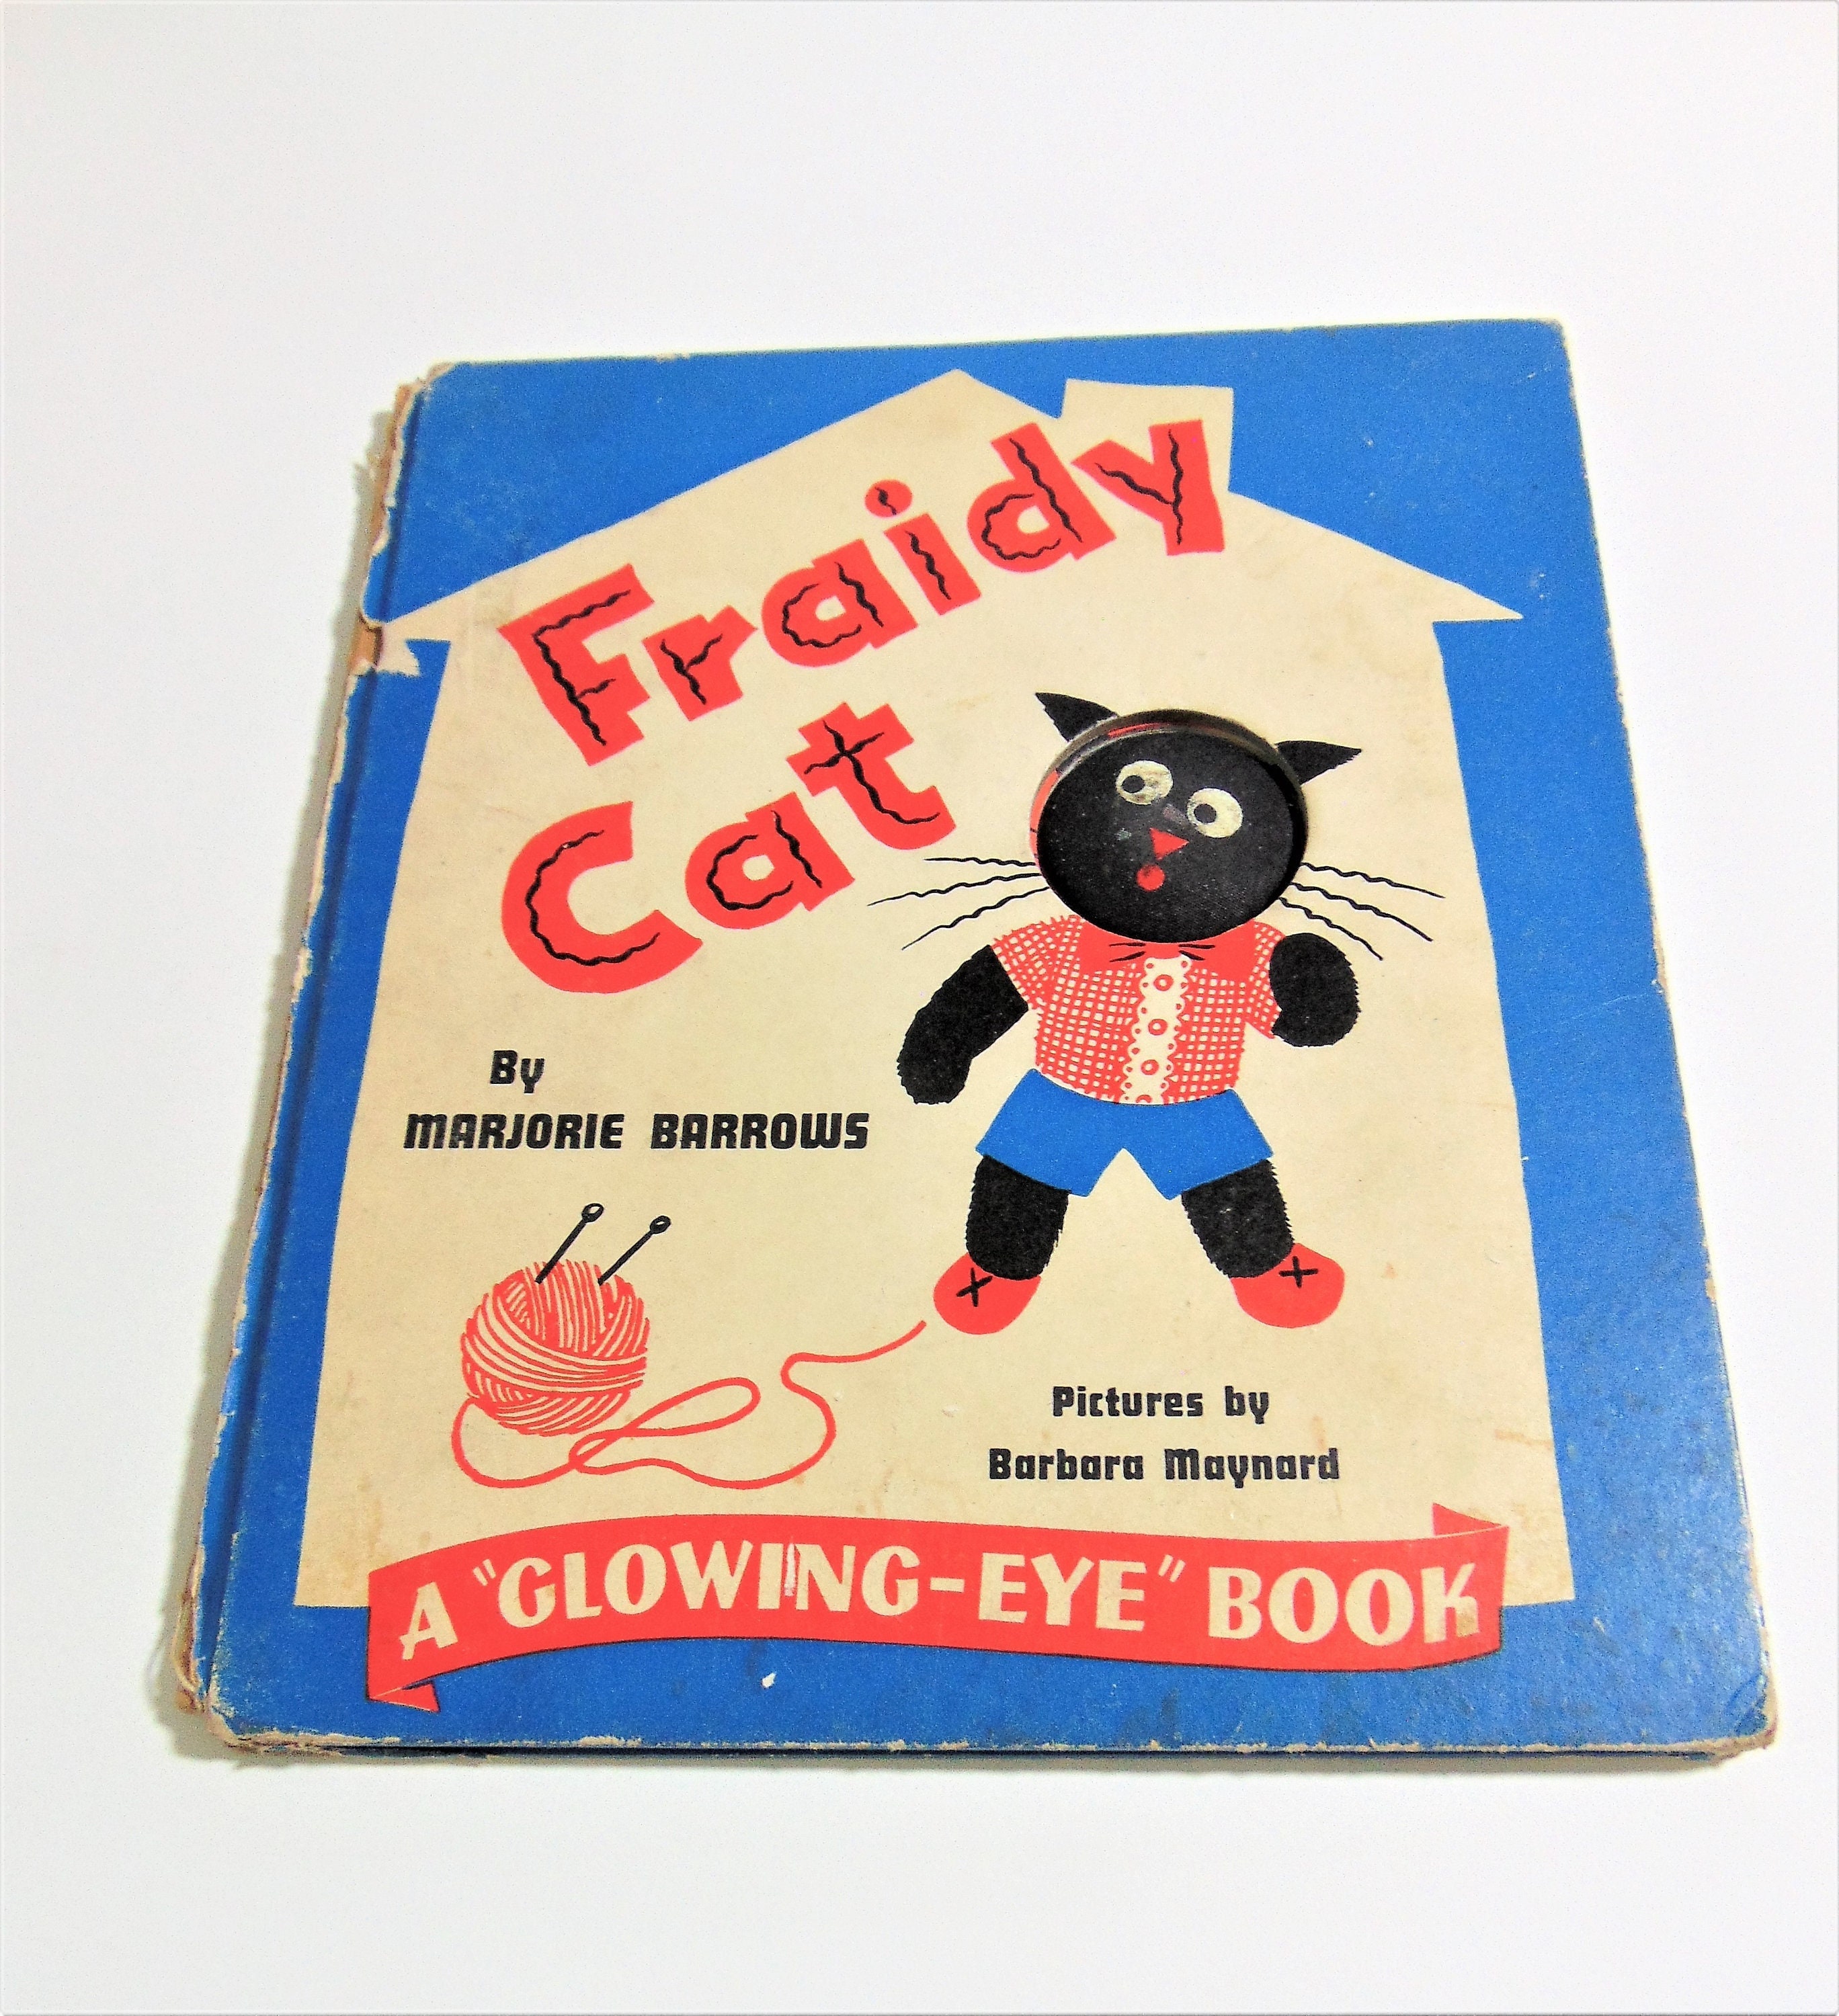 Fraidy Cat, Vintage 1940s Children's Book, Written by Marjorie Barrows,  Illustrated by Barbara Maynard, Glowing Eye Book, 1945 Printing